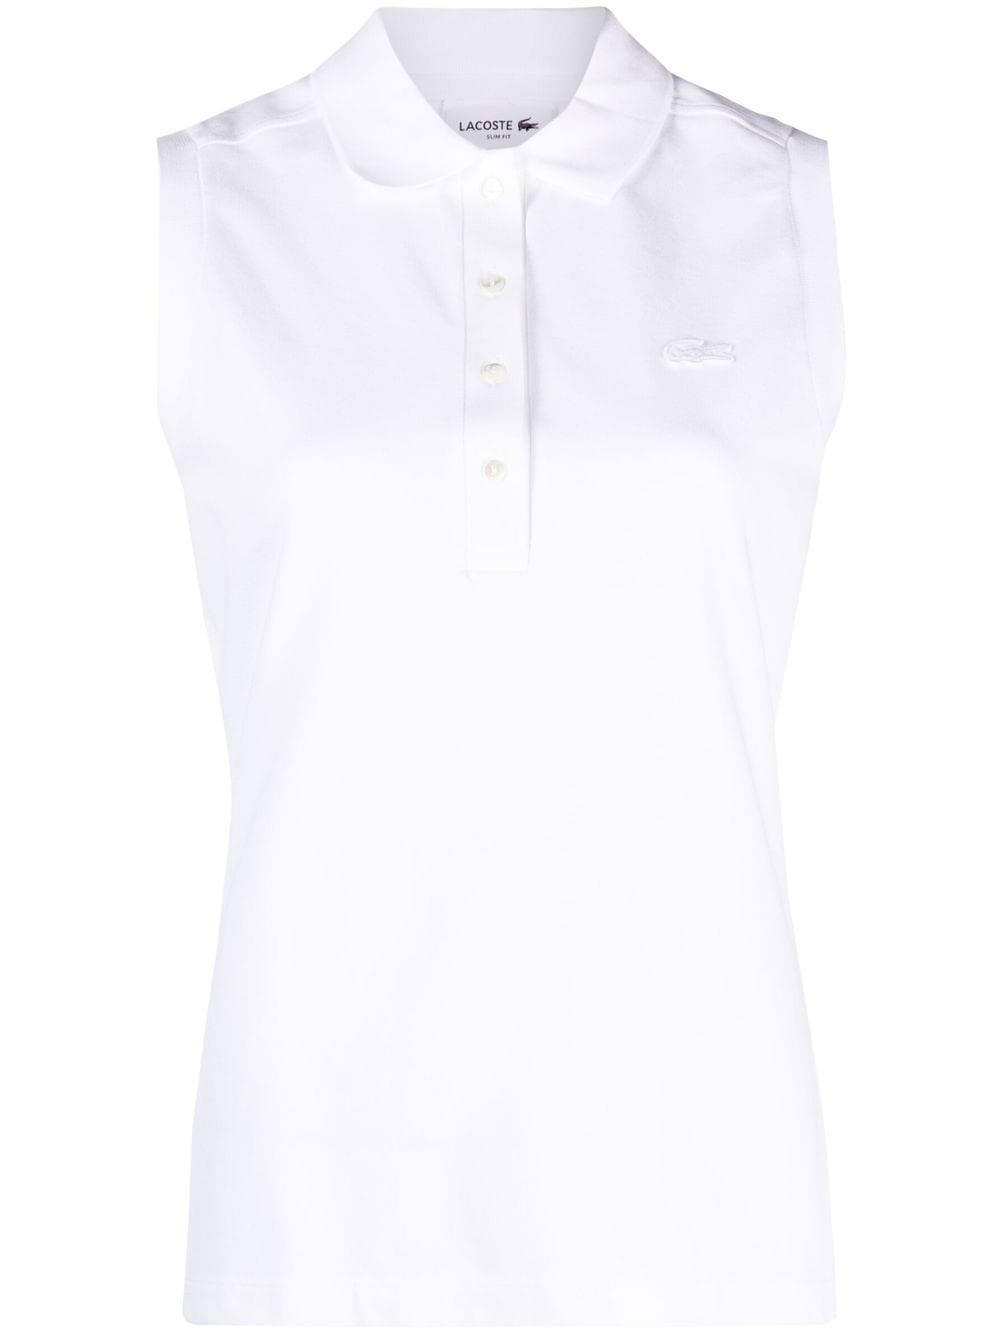 Image 1 of Lacoste sleeveless cotton polo shirt